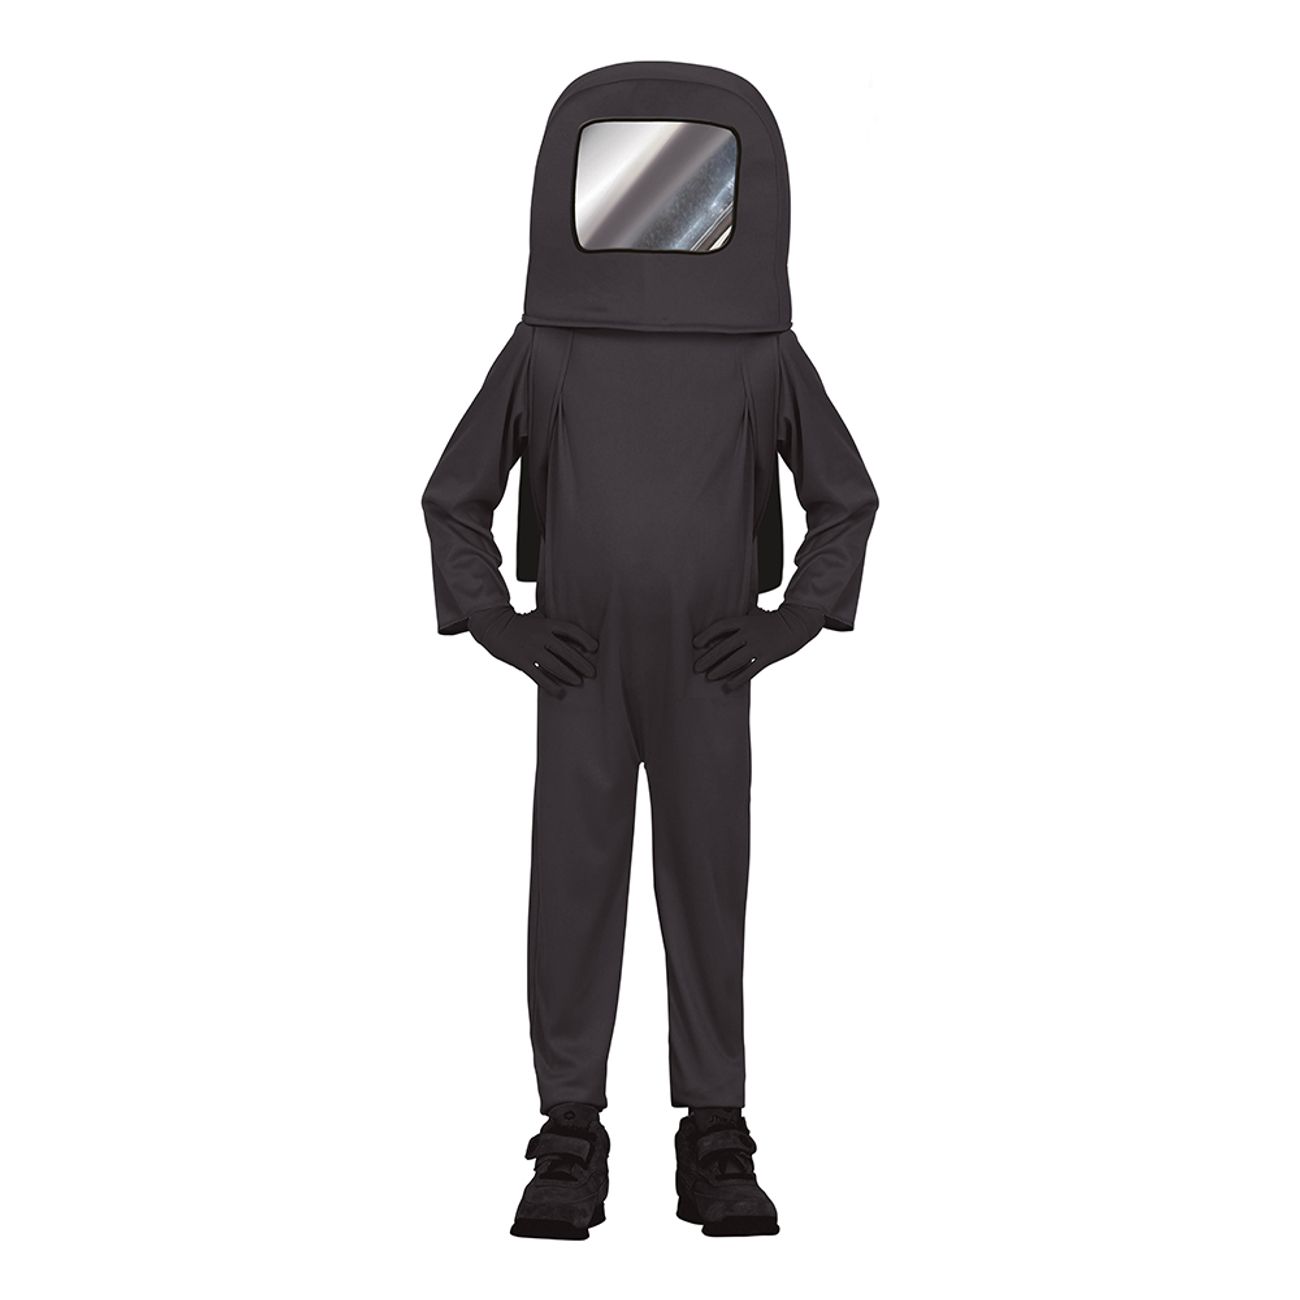 svart-astronaut-barn-maskeraddrakt-79766-1